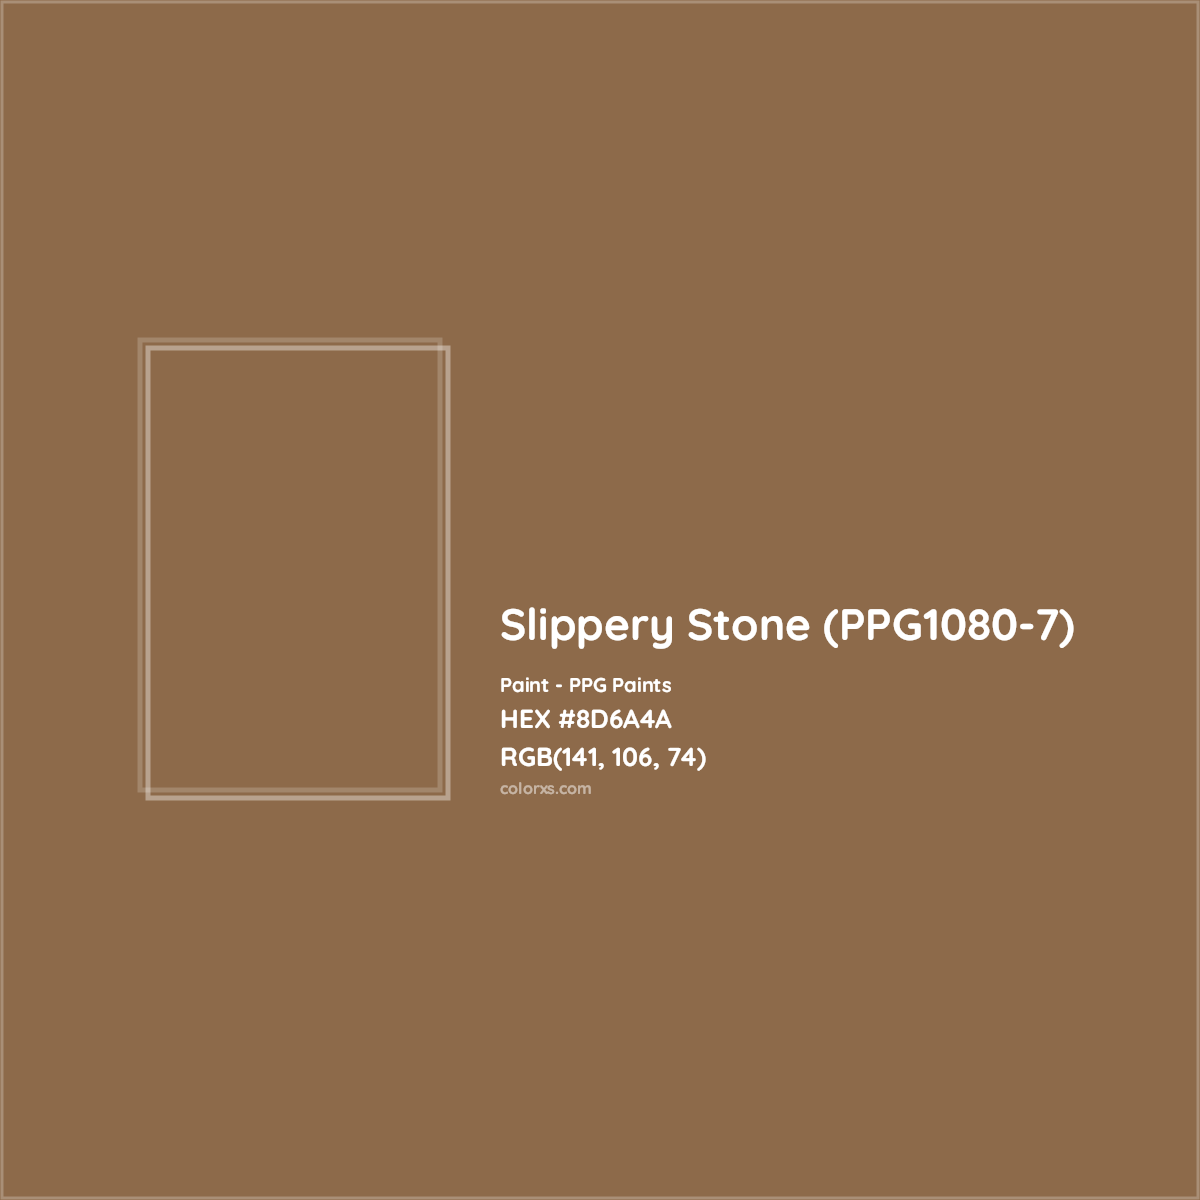 HEX #8D6A4A Slippery Stone (PPG1080-7) Paint PPG Paints - Color Code